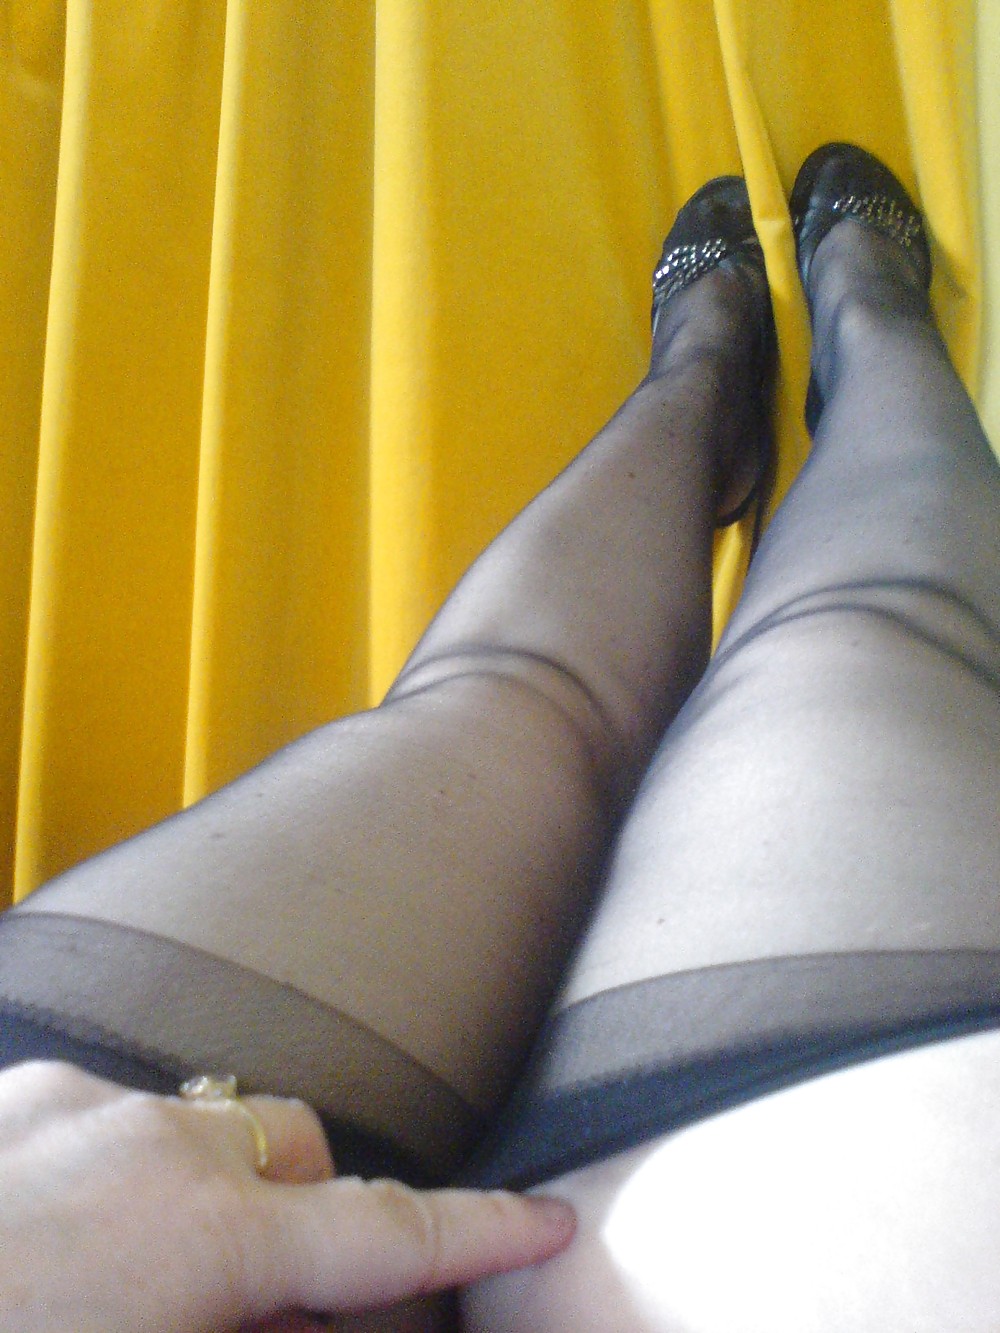 My legs in stockings